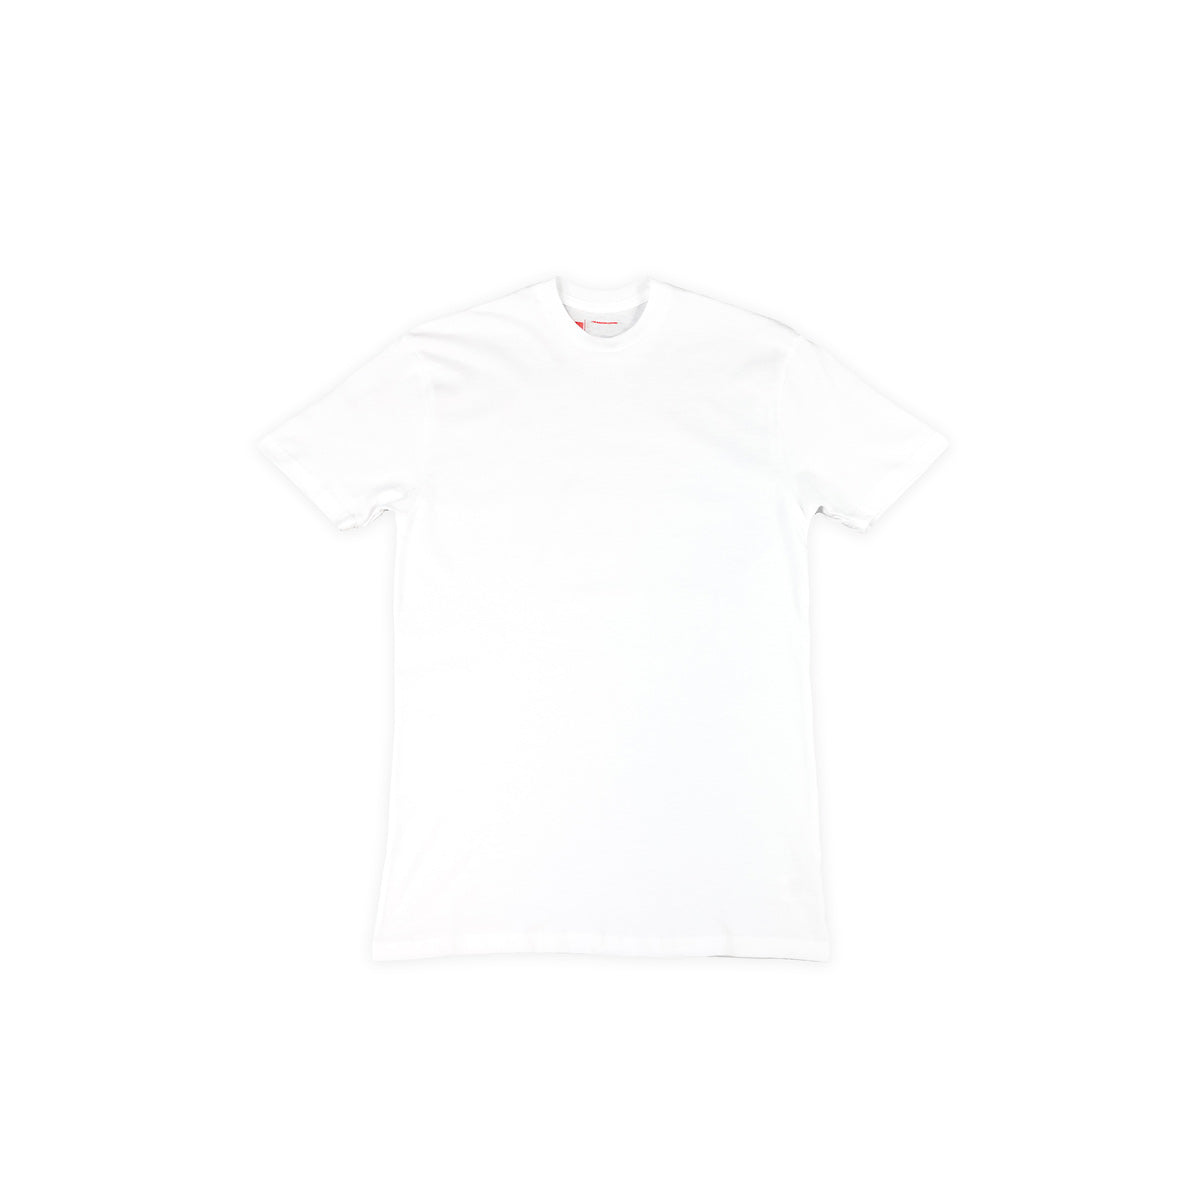 Marathon Shoulder T-Shirt (Ultra Fitted) - White/Black